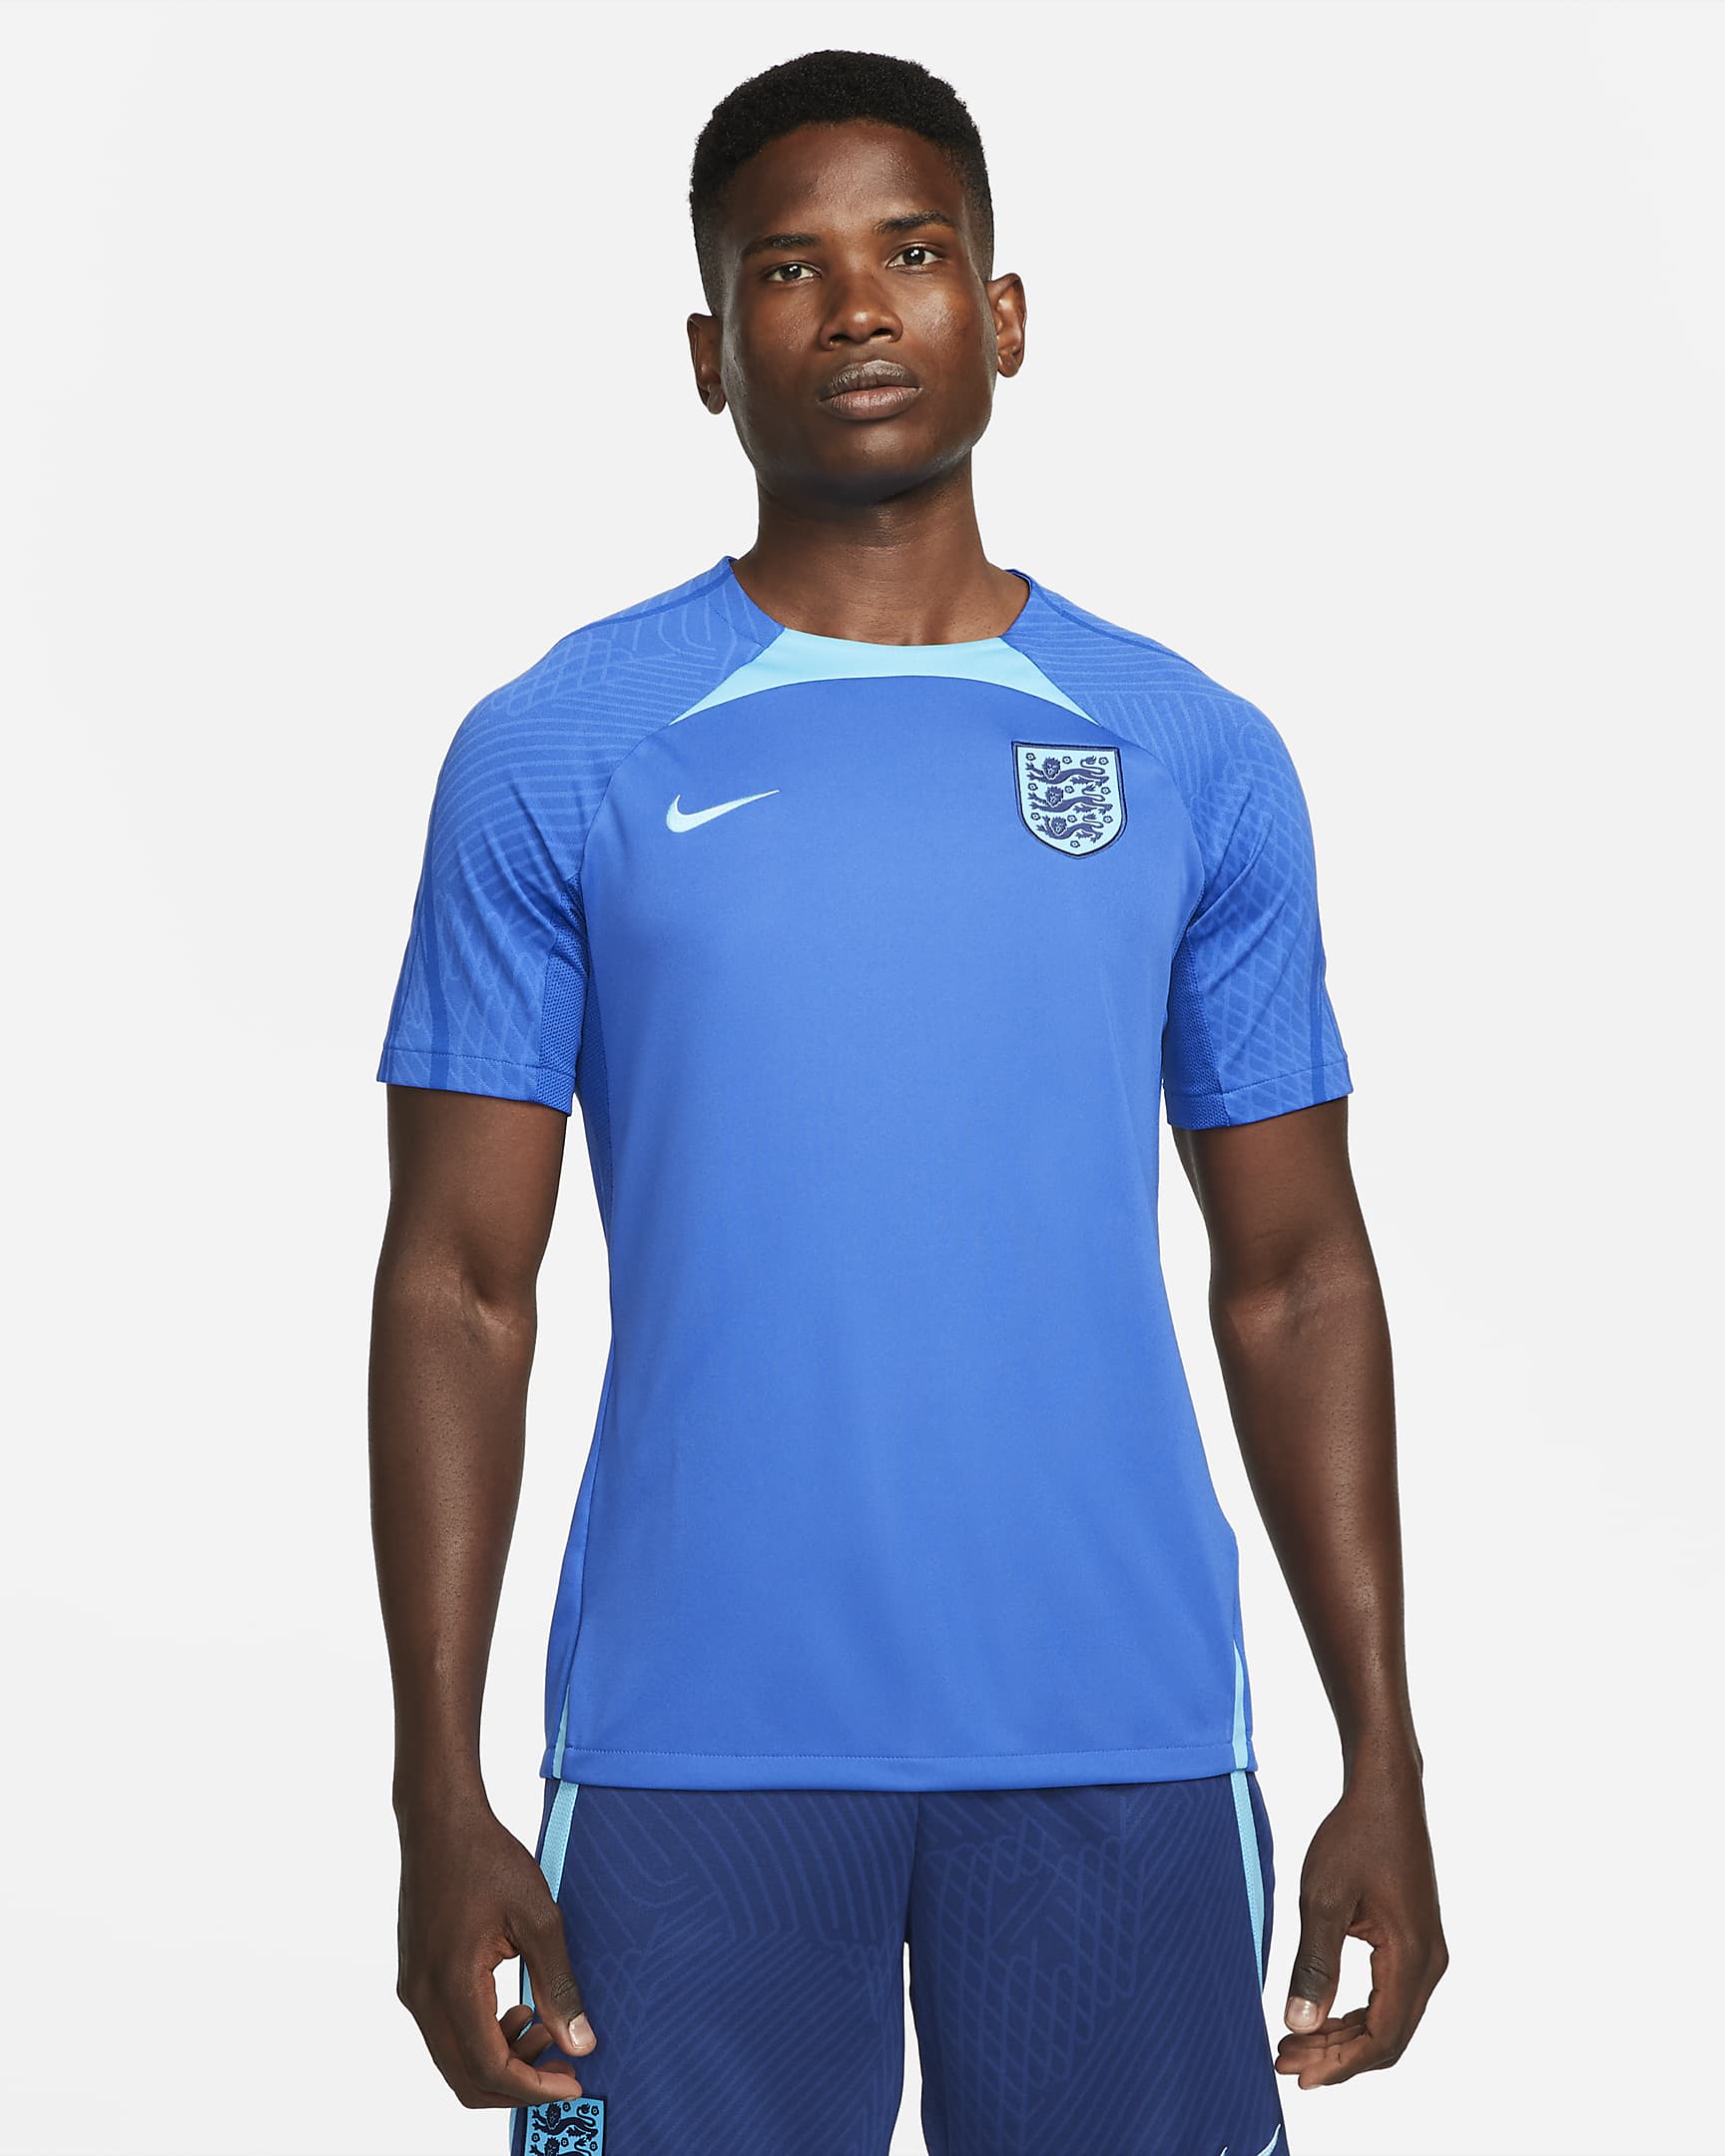 England Strike Men's Nike Dri-FIT Short-Sleeve Football Top. Nike SG